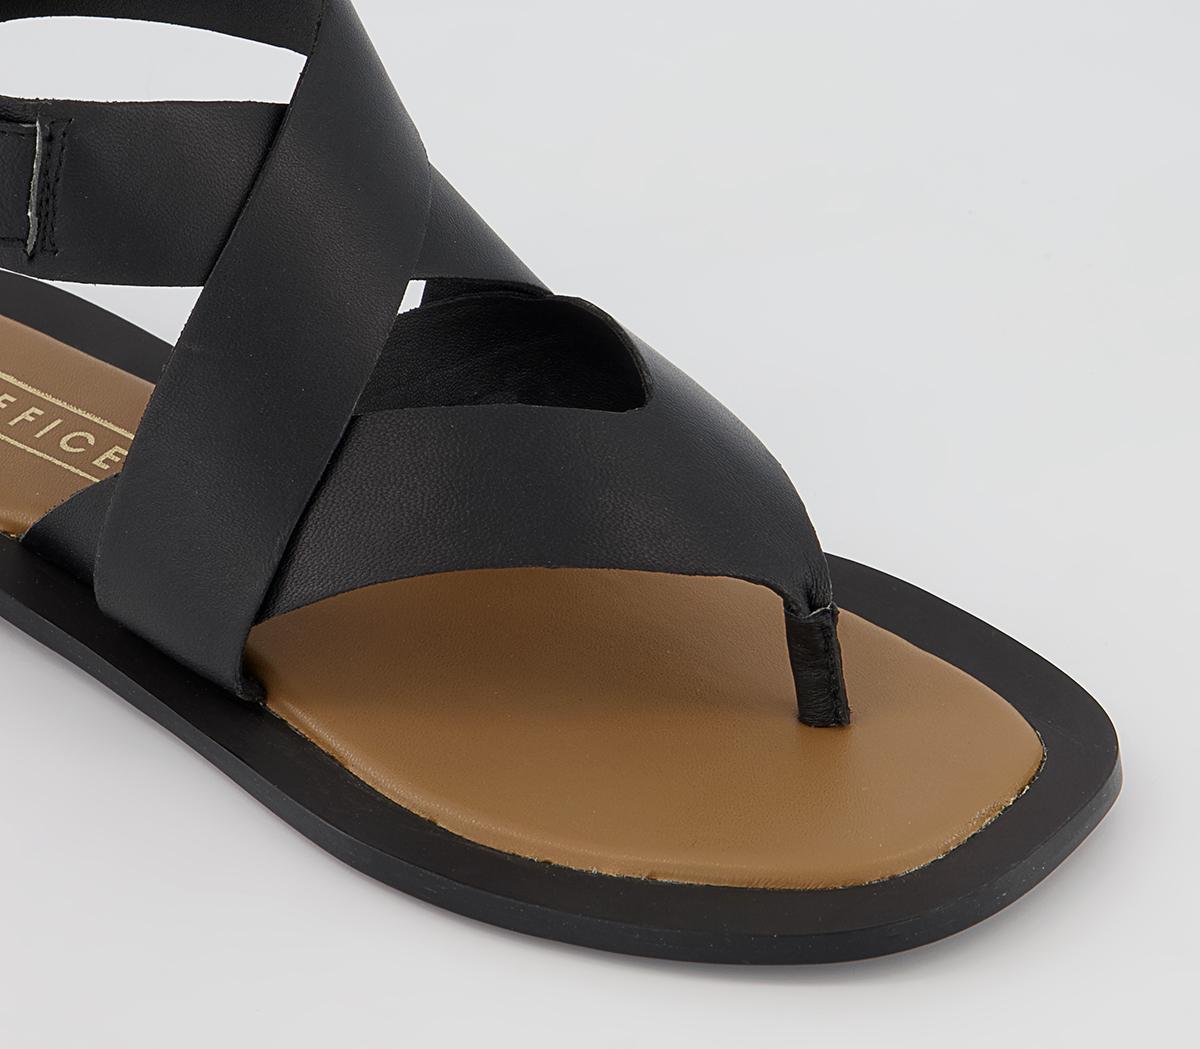 OFFICE Sashay Toe Post Sandals Black Leather - Women’s Sandals